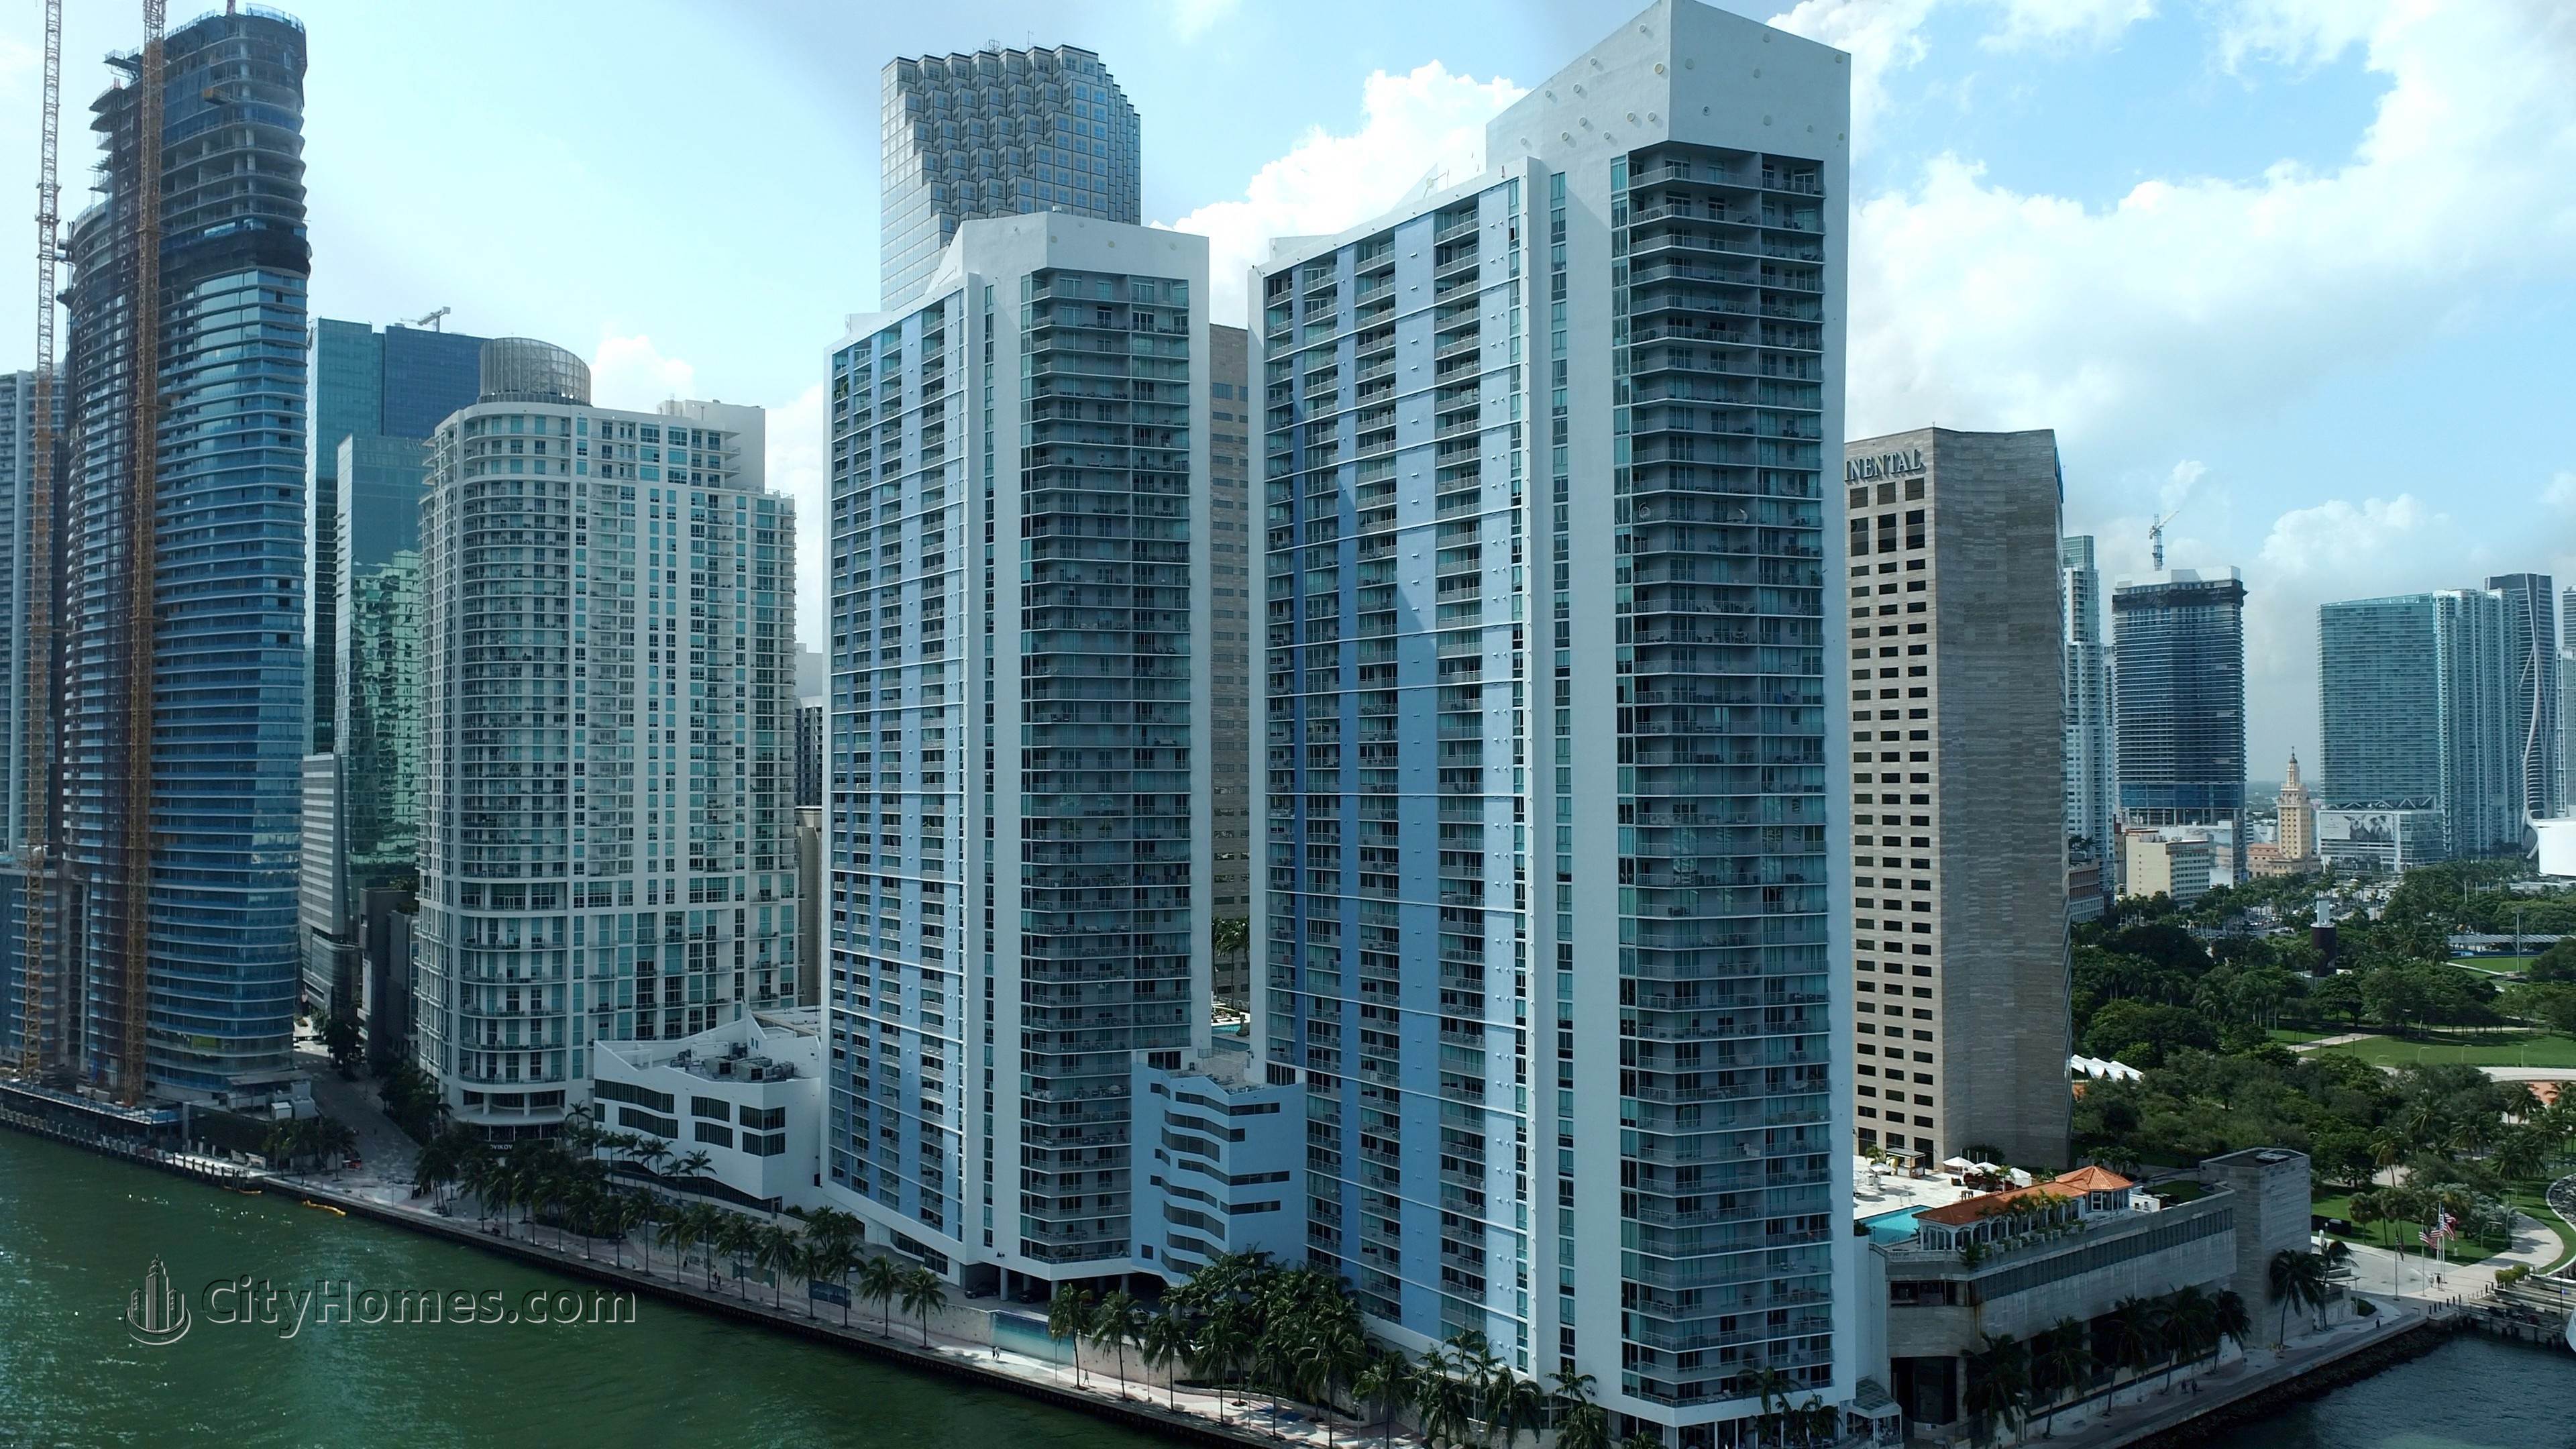 2. One Miami gebouw op 325 And 335 S Biscayne Blvd, Miami, FL 33131